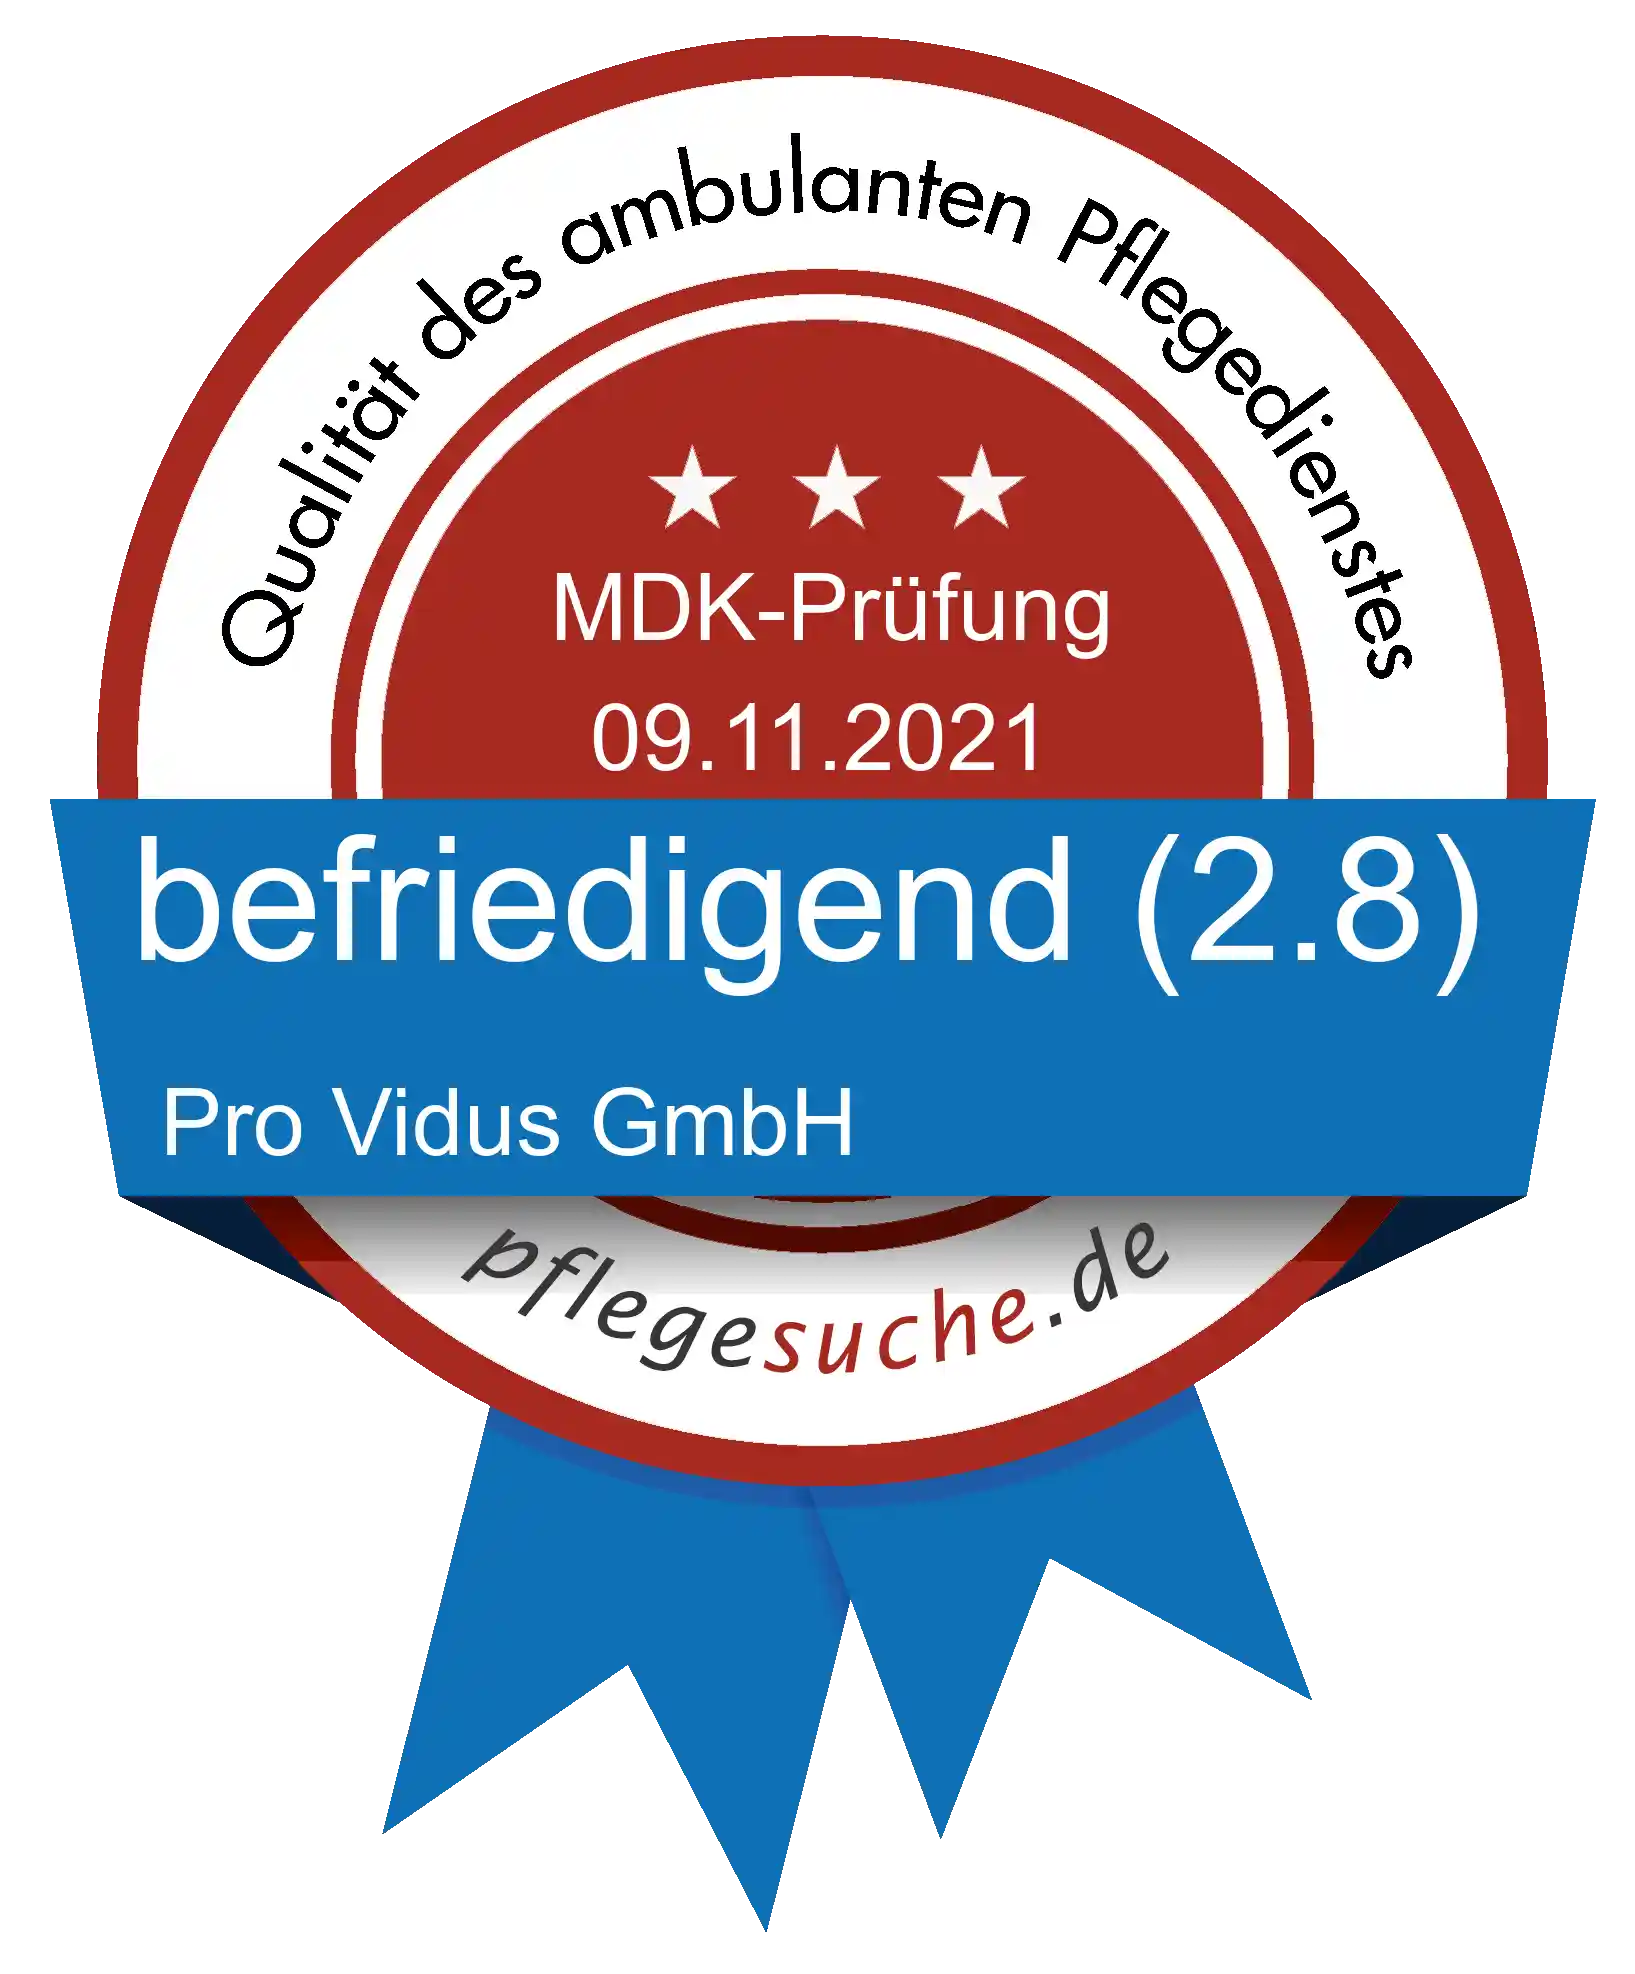 Siegel Benotung: Pro Vidus GmbH